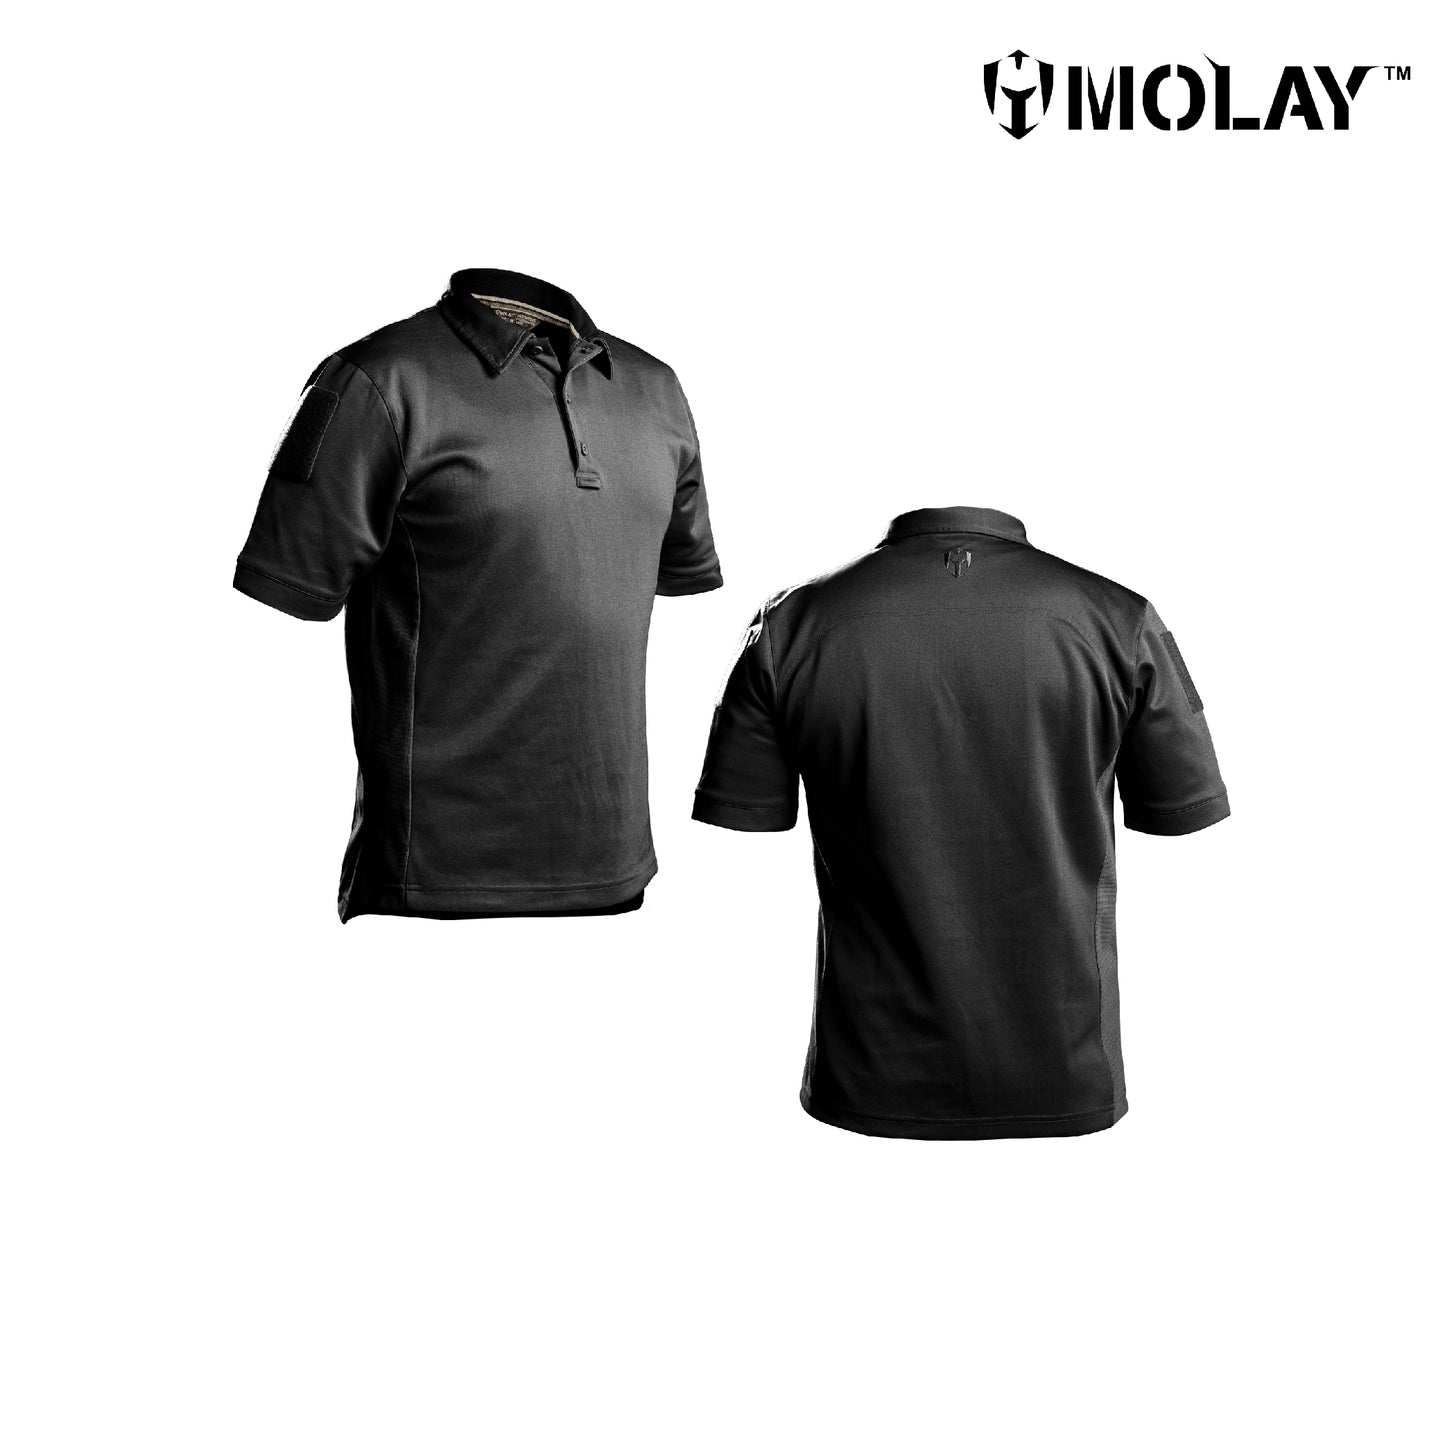 Molay® Dexterous Performance Shirt